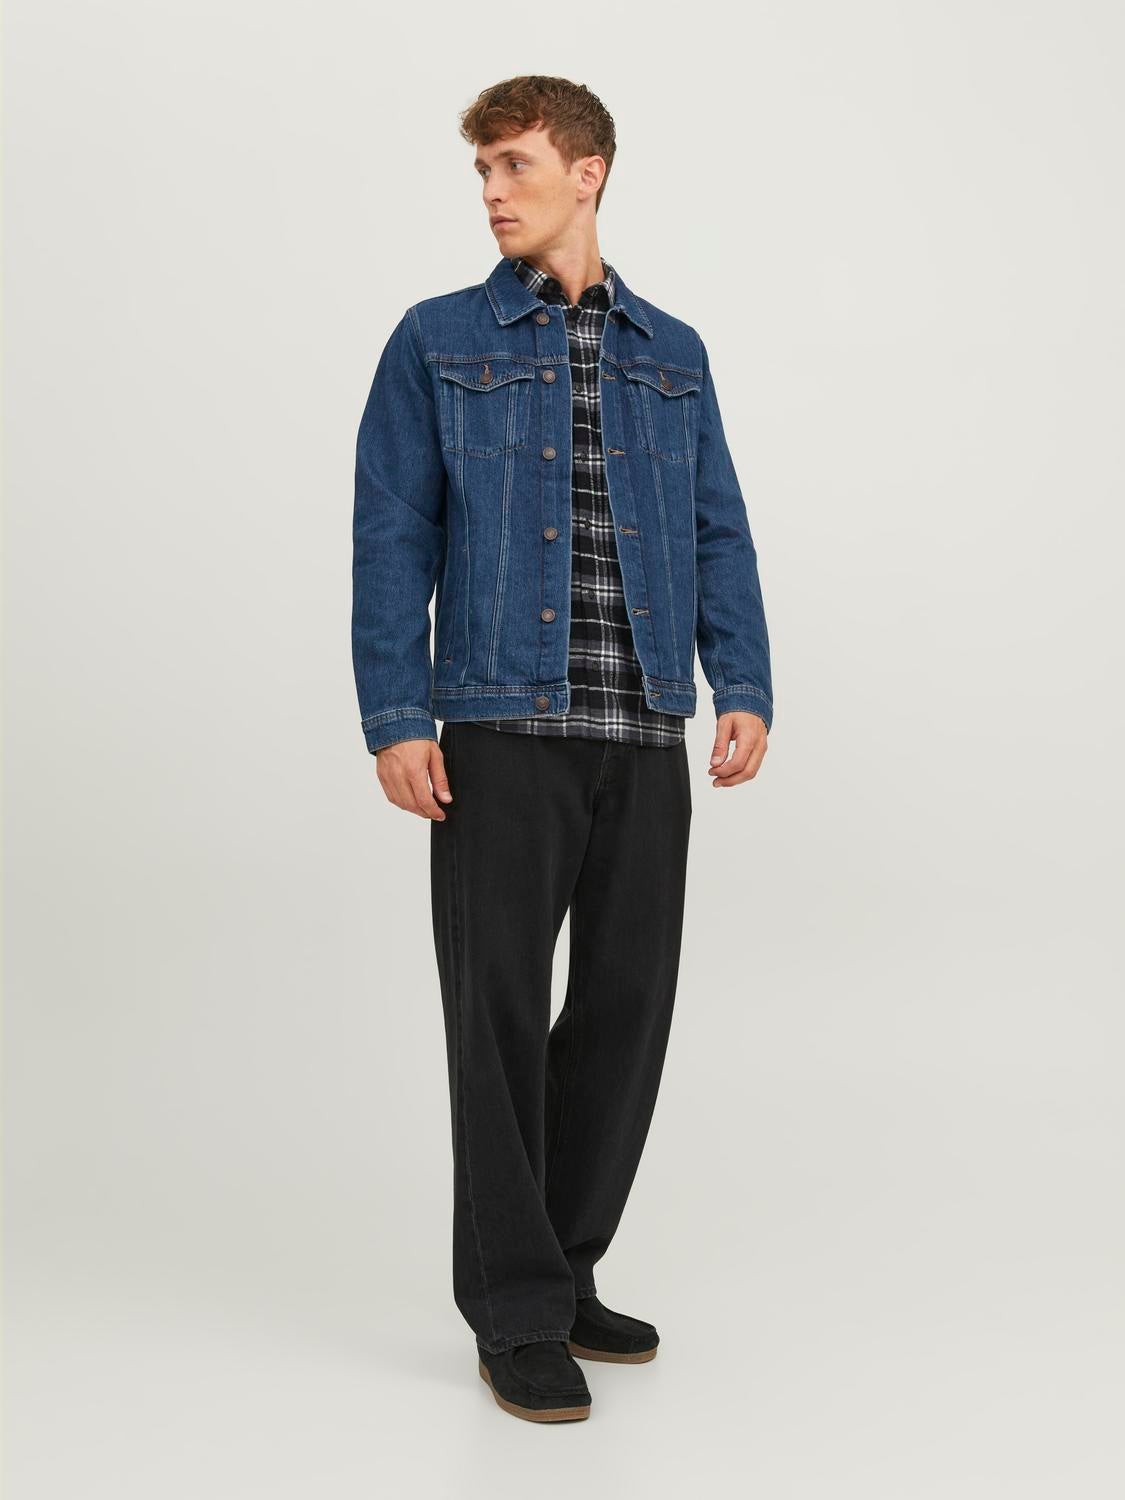 BNWT* Jack & Jones Classic Denim Jacket (Blue), Men's Fashion, Coats,  Jackets and Outerwear on Carousell